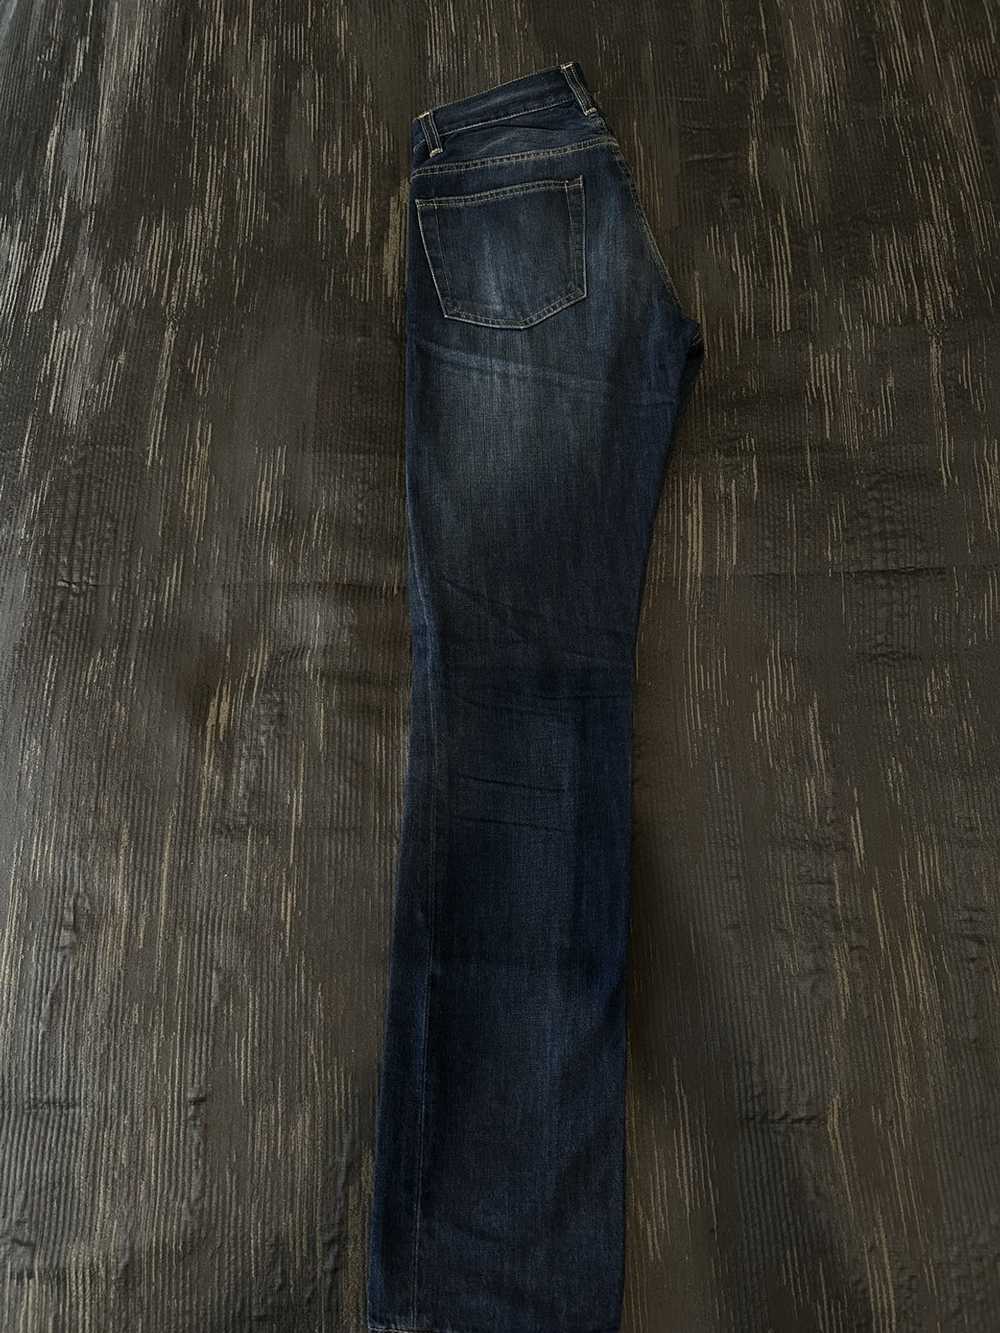 Acne Studios Acne Studios Slim Fit Jeans (29x32) - image 2